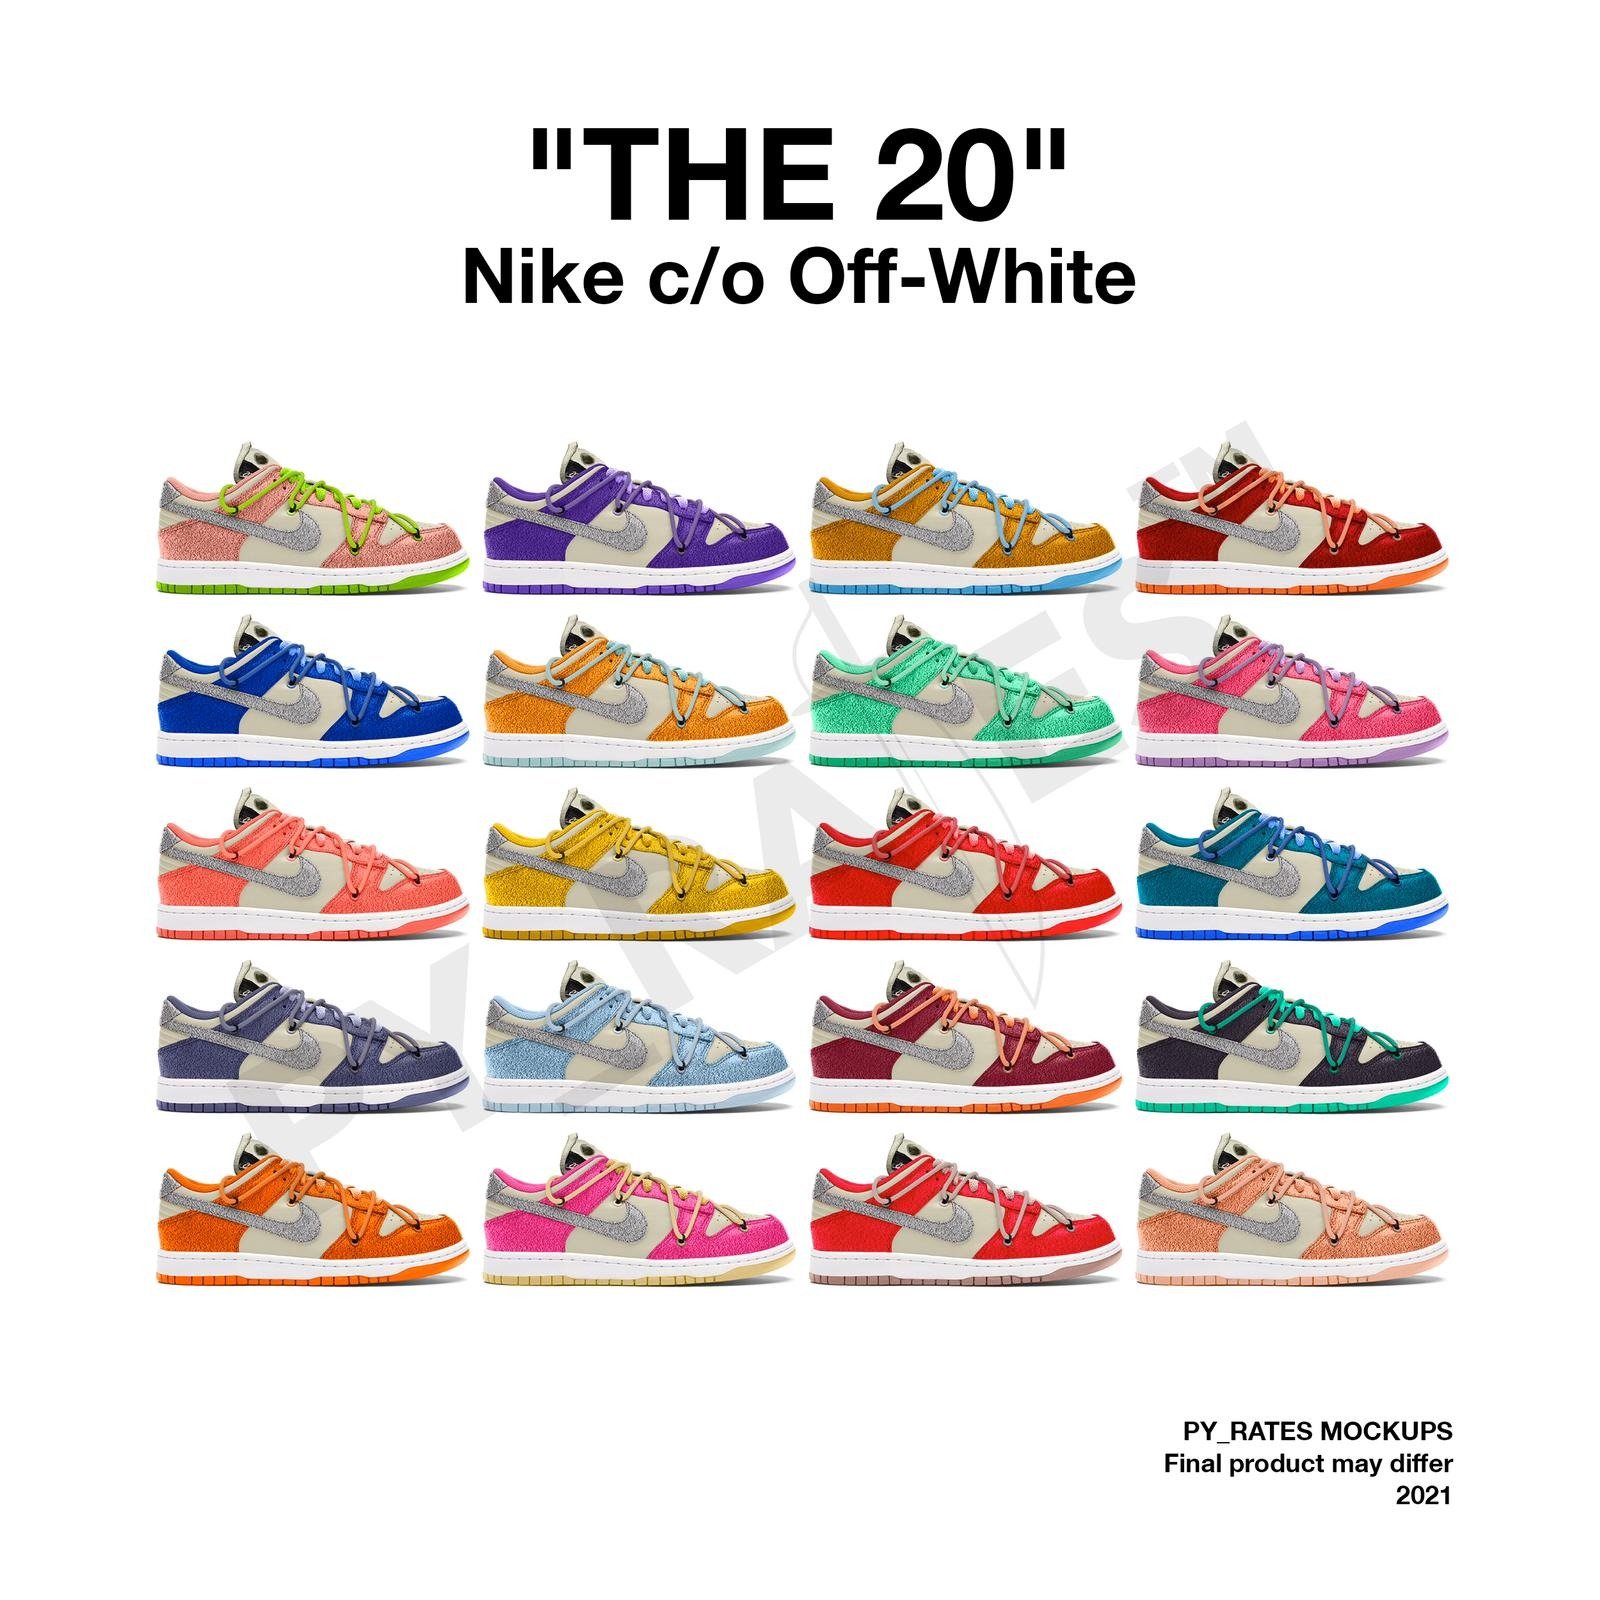 Off-White x Nike 'THE 20'